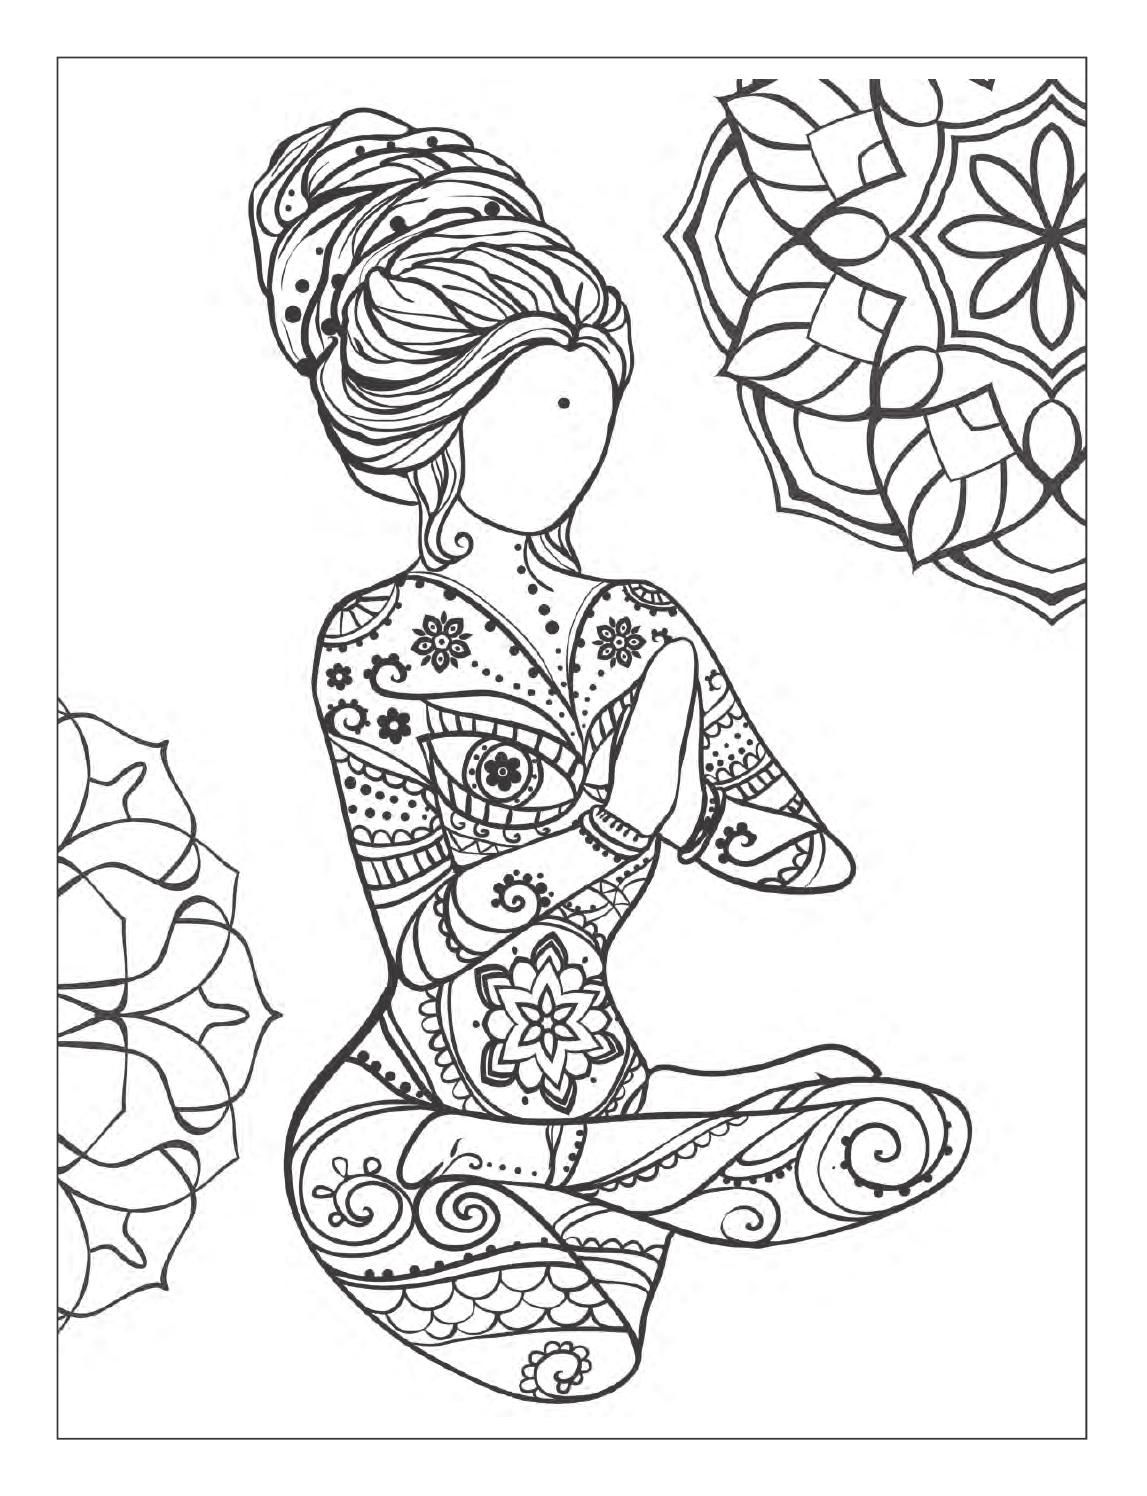 Download Yoga And Meditation Coloring Book For Adults With Yoga Poses And Mandalas Mandala Coloring Mandala Coloring Pages Mandala Coloring Books Coloring Home